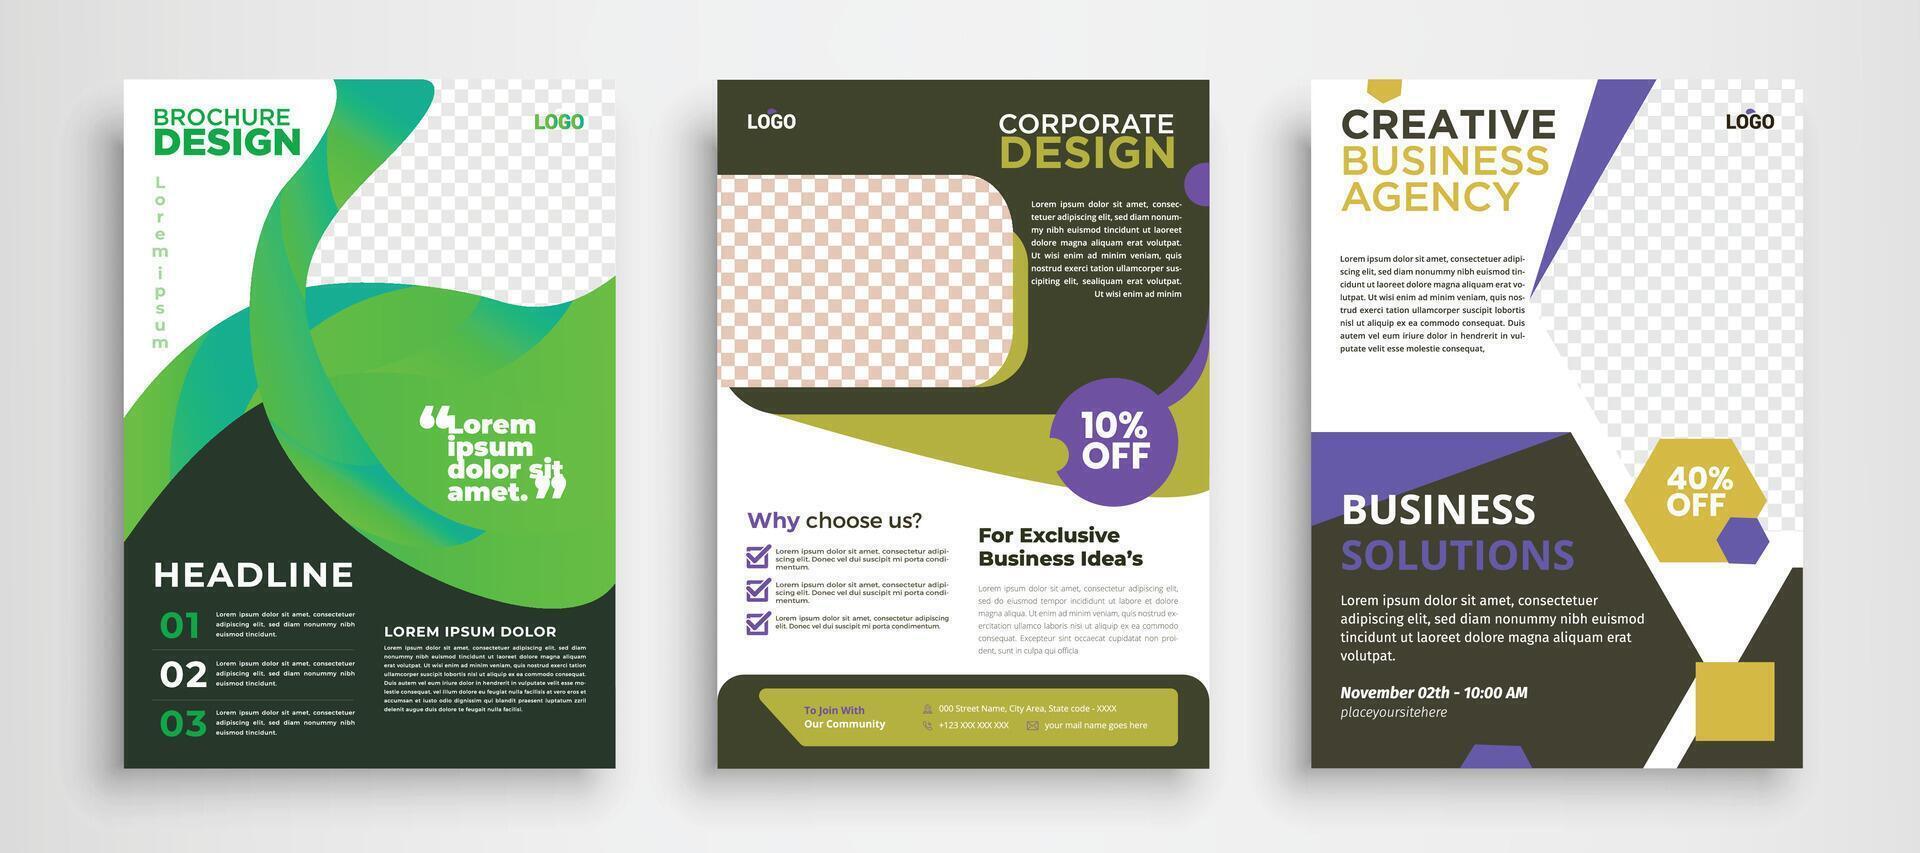 Template vector design for Brochure, Annual Report, Magazine, Poster, Corporate Presentation, Portfolio, Flyer